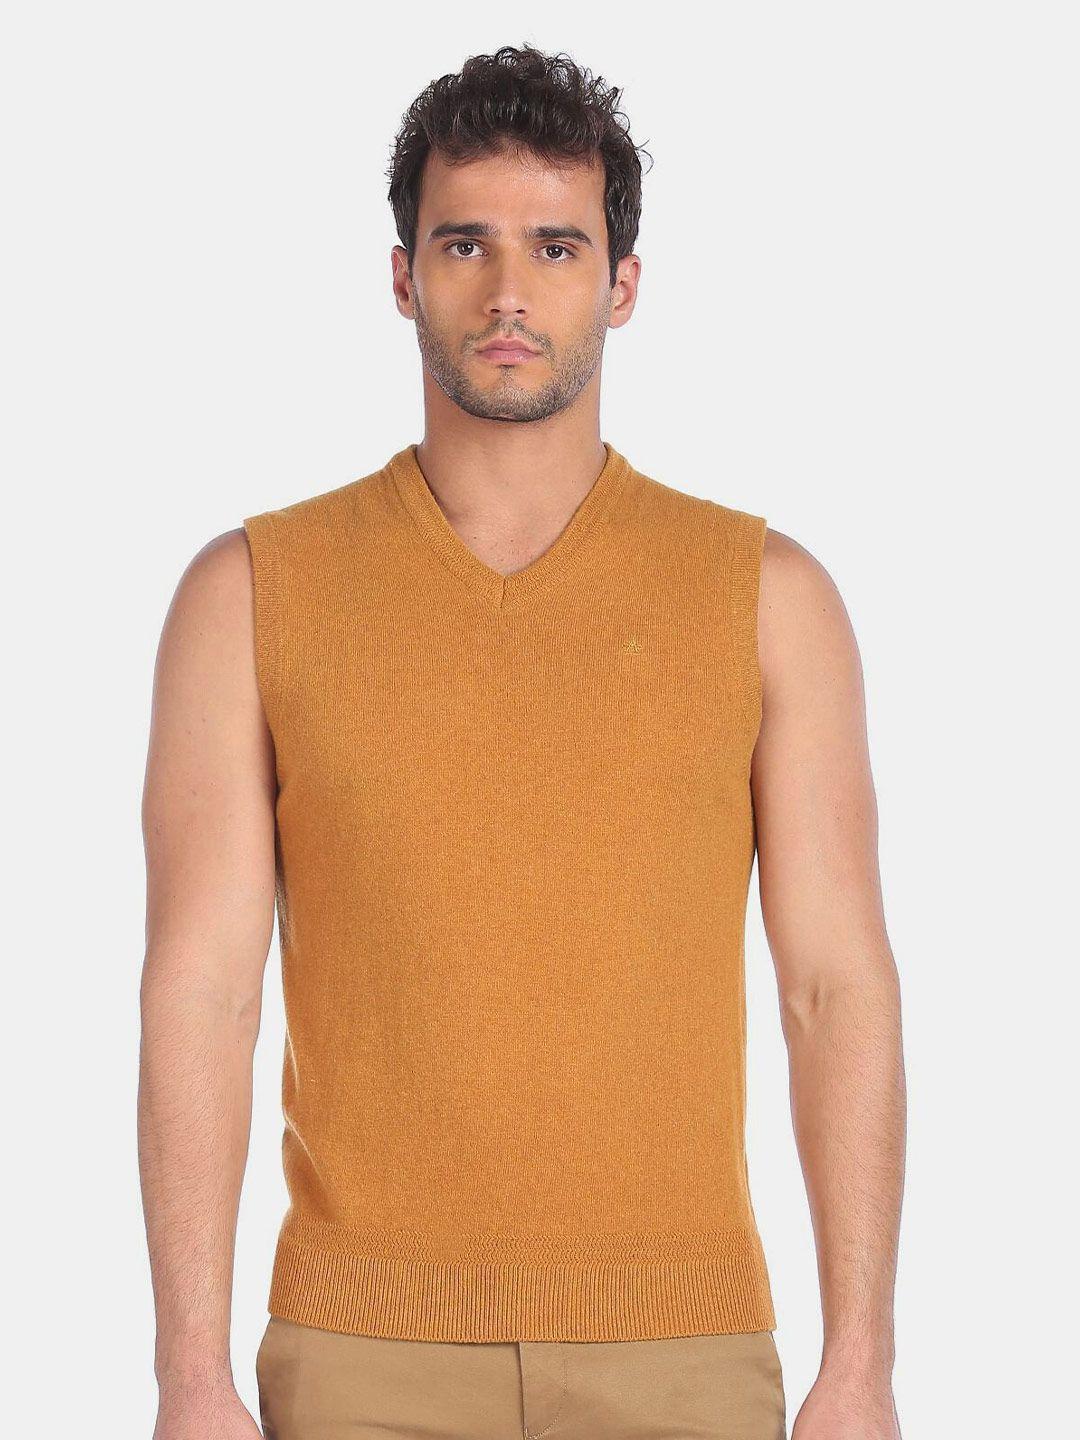 arrow-sport-men-mustard-sweater-vest